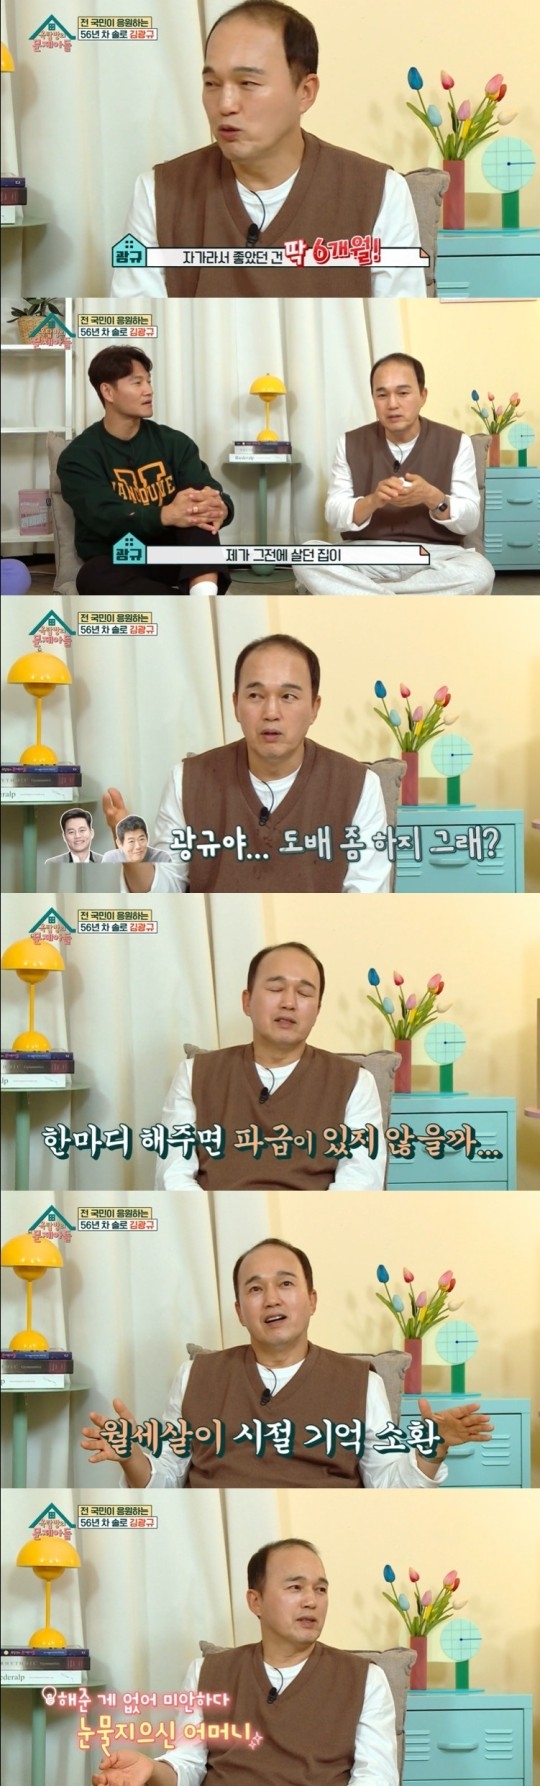 KBS 2TV 예능 프로그램 ‘옥탑방의 문제아들’ 제공